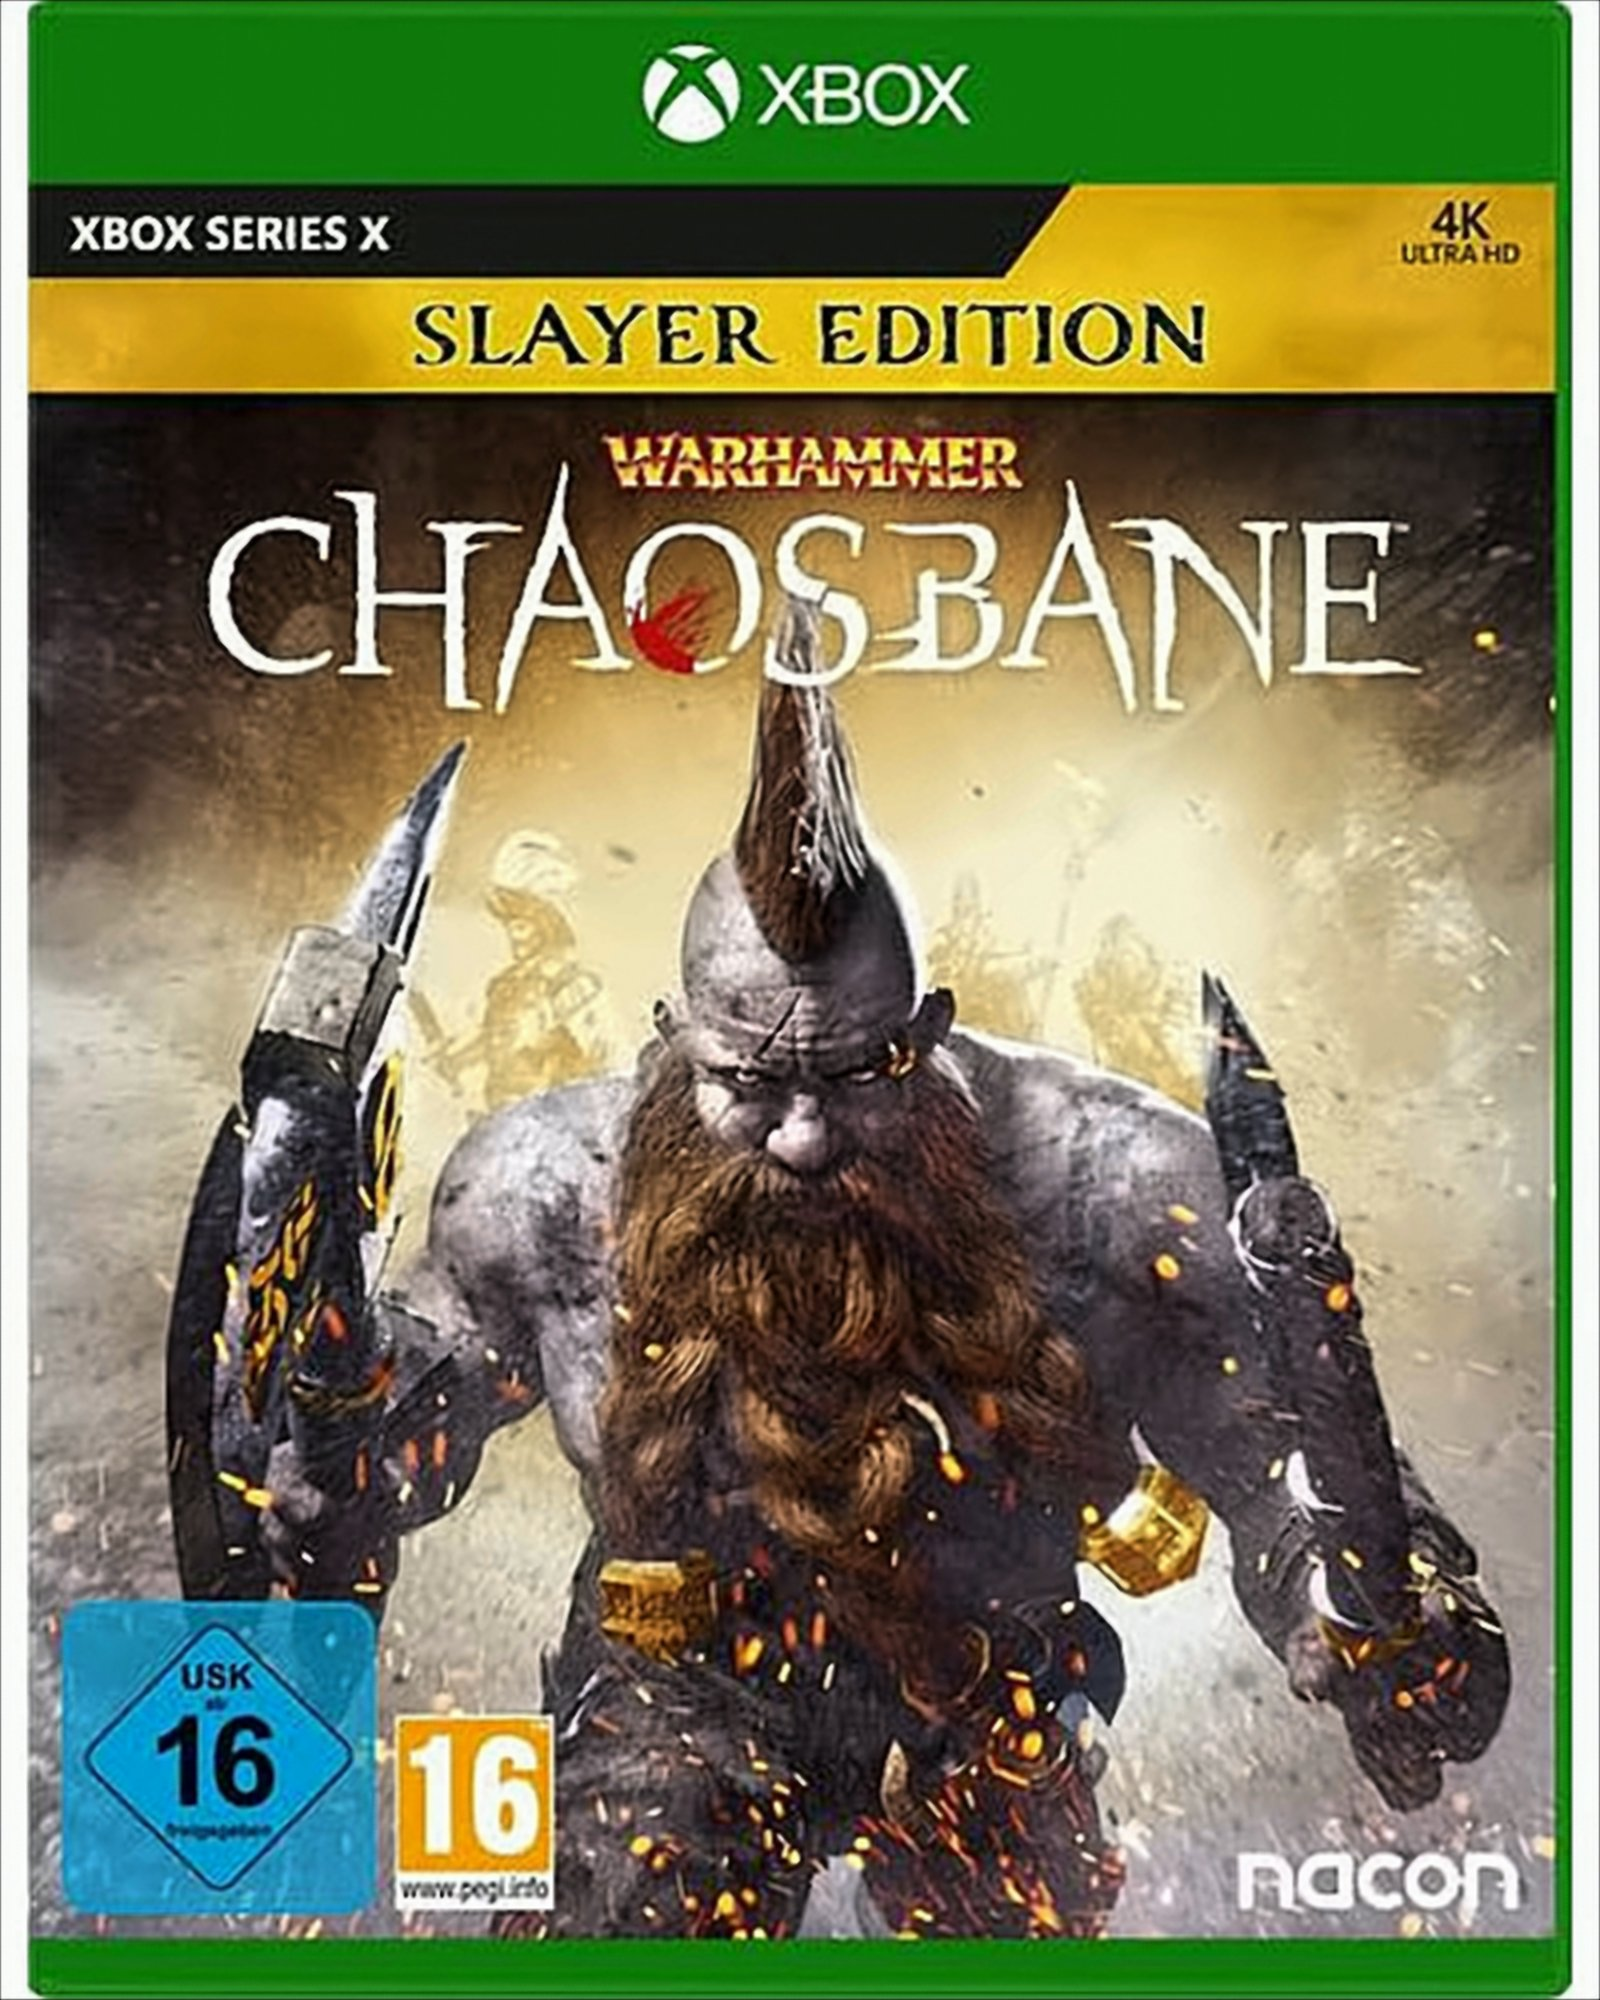 Series Edition Slayer [Xbox Chaosbane XBSX X|S] - Warhammer